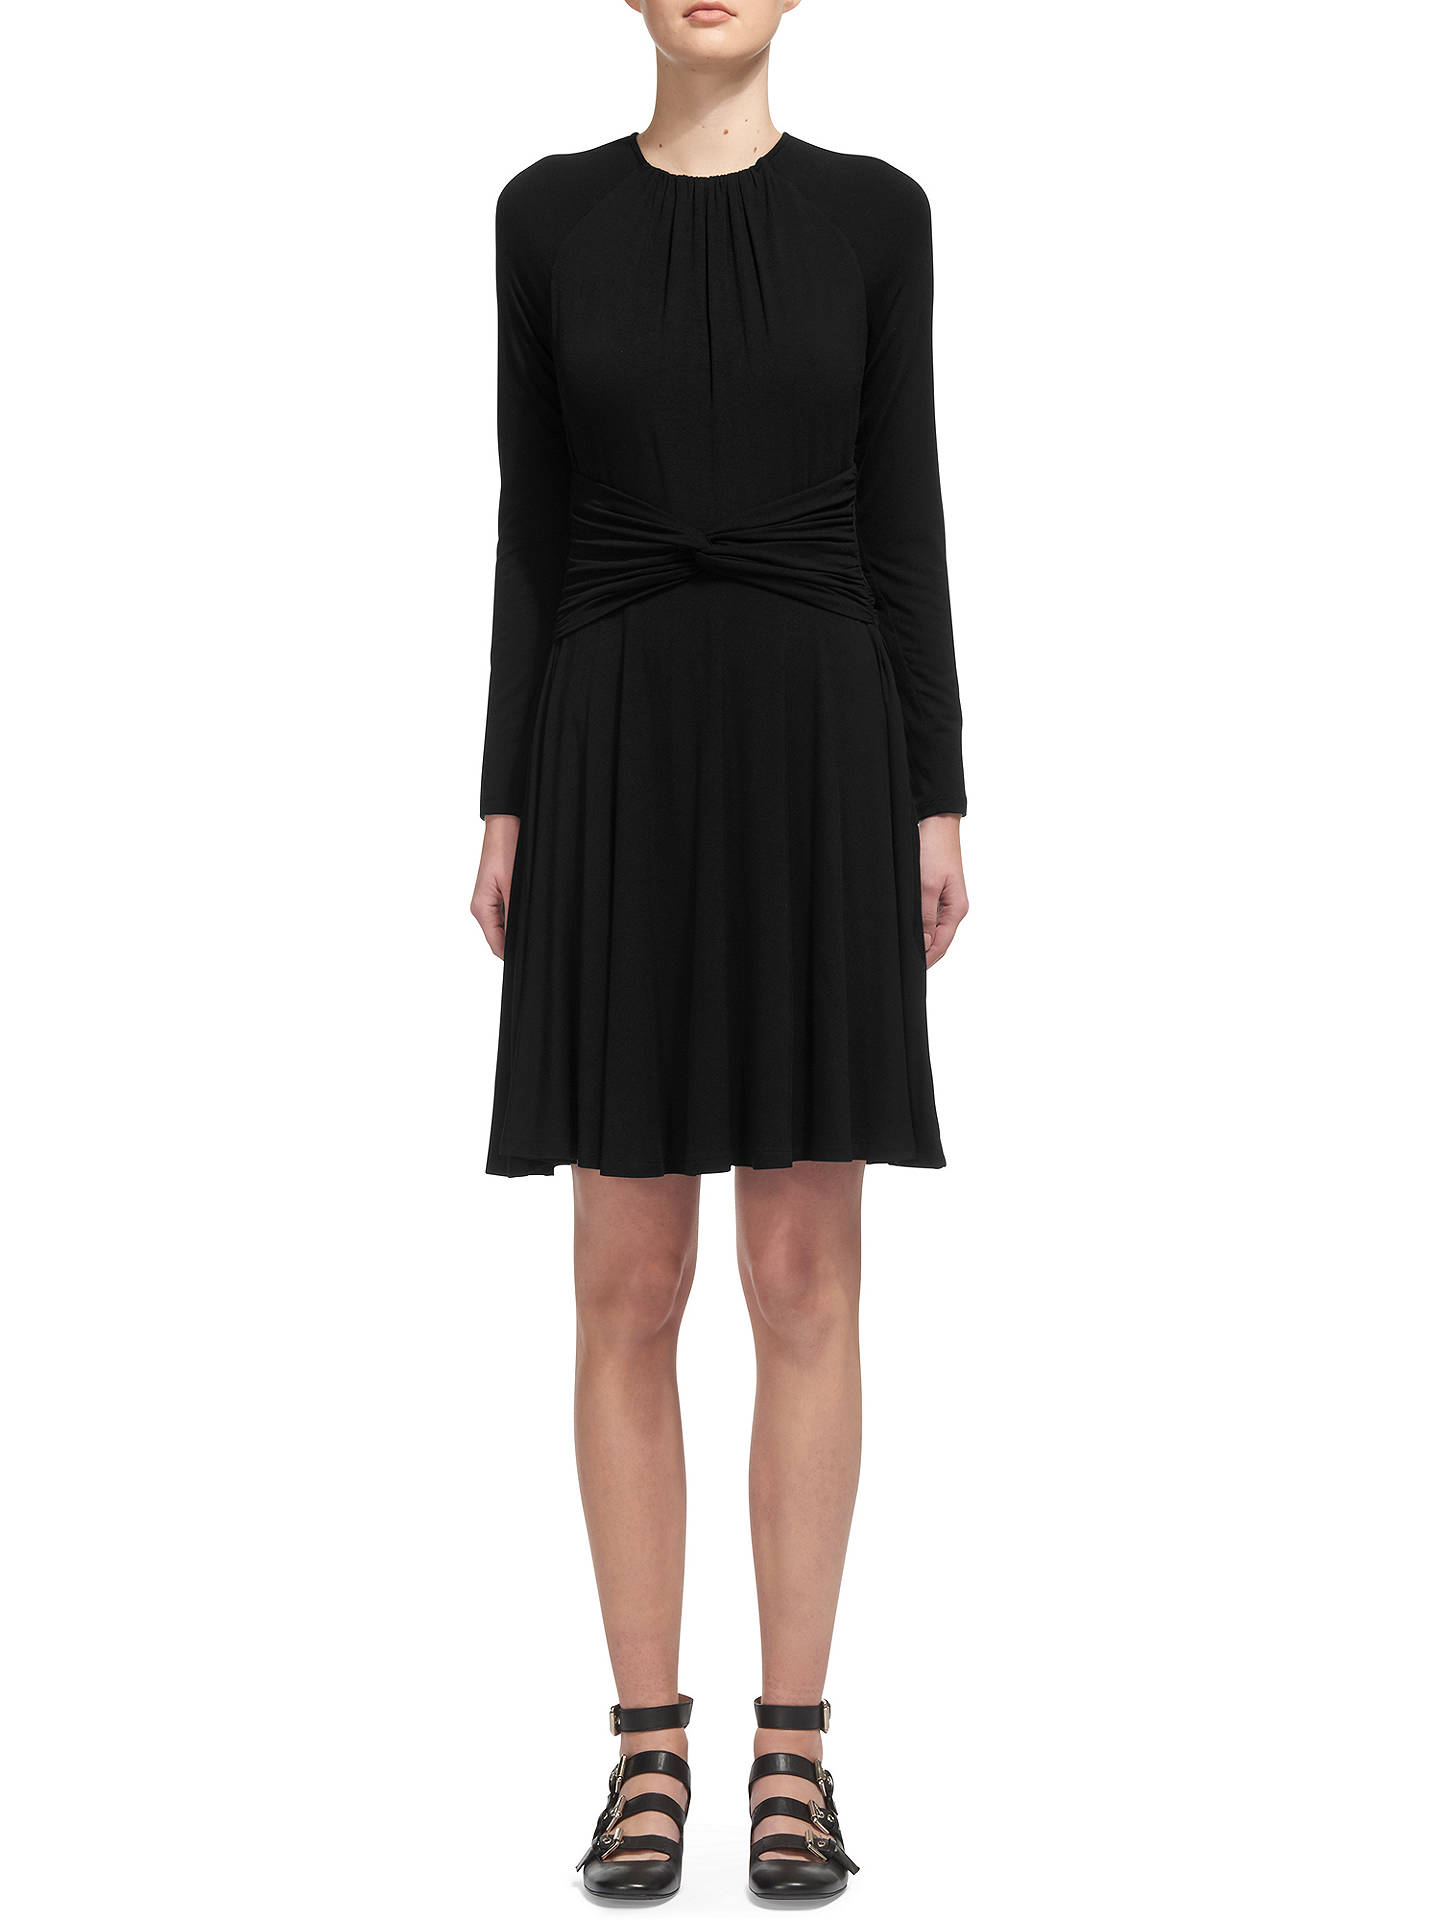 Whistles Celestine Plain Jersey Dress, Black at John Lewis & Partners